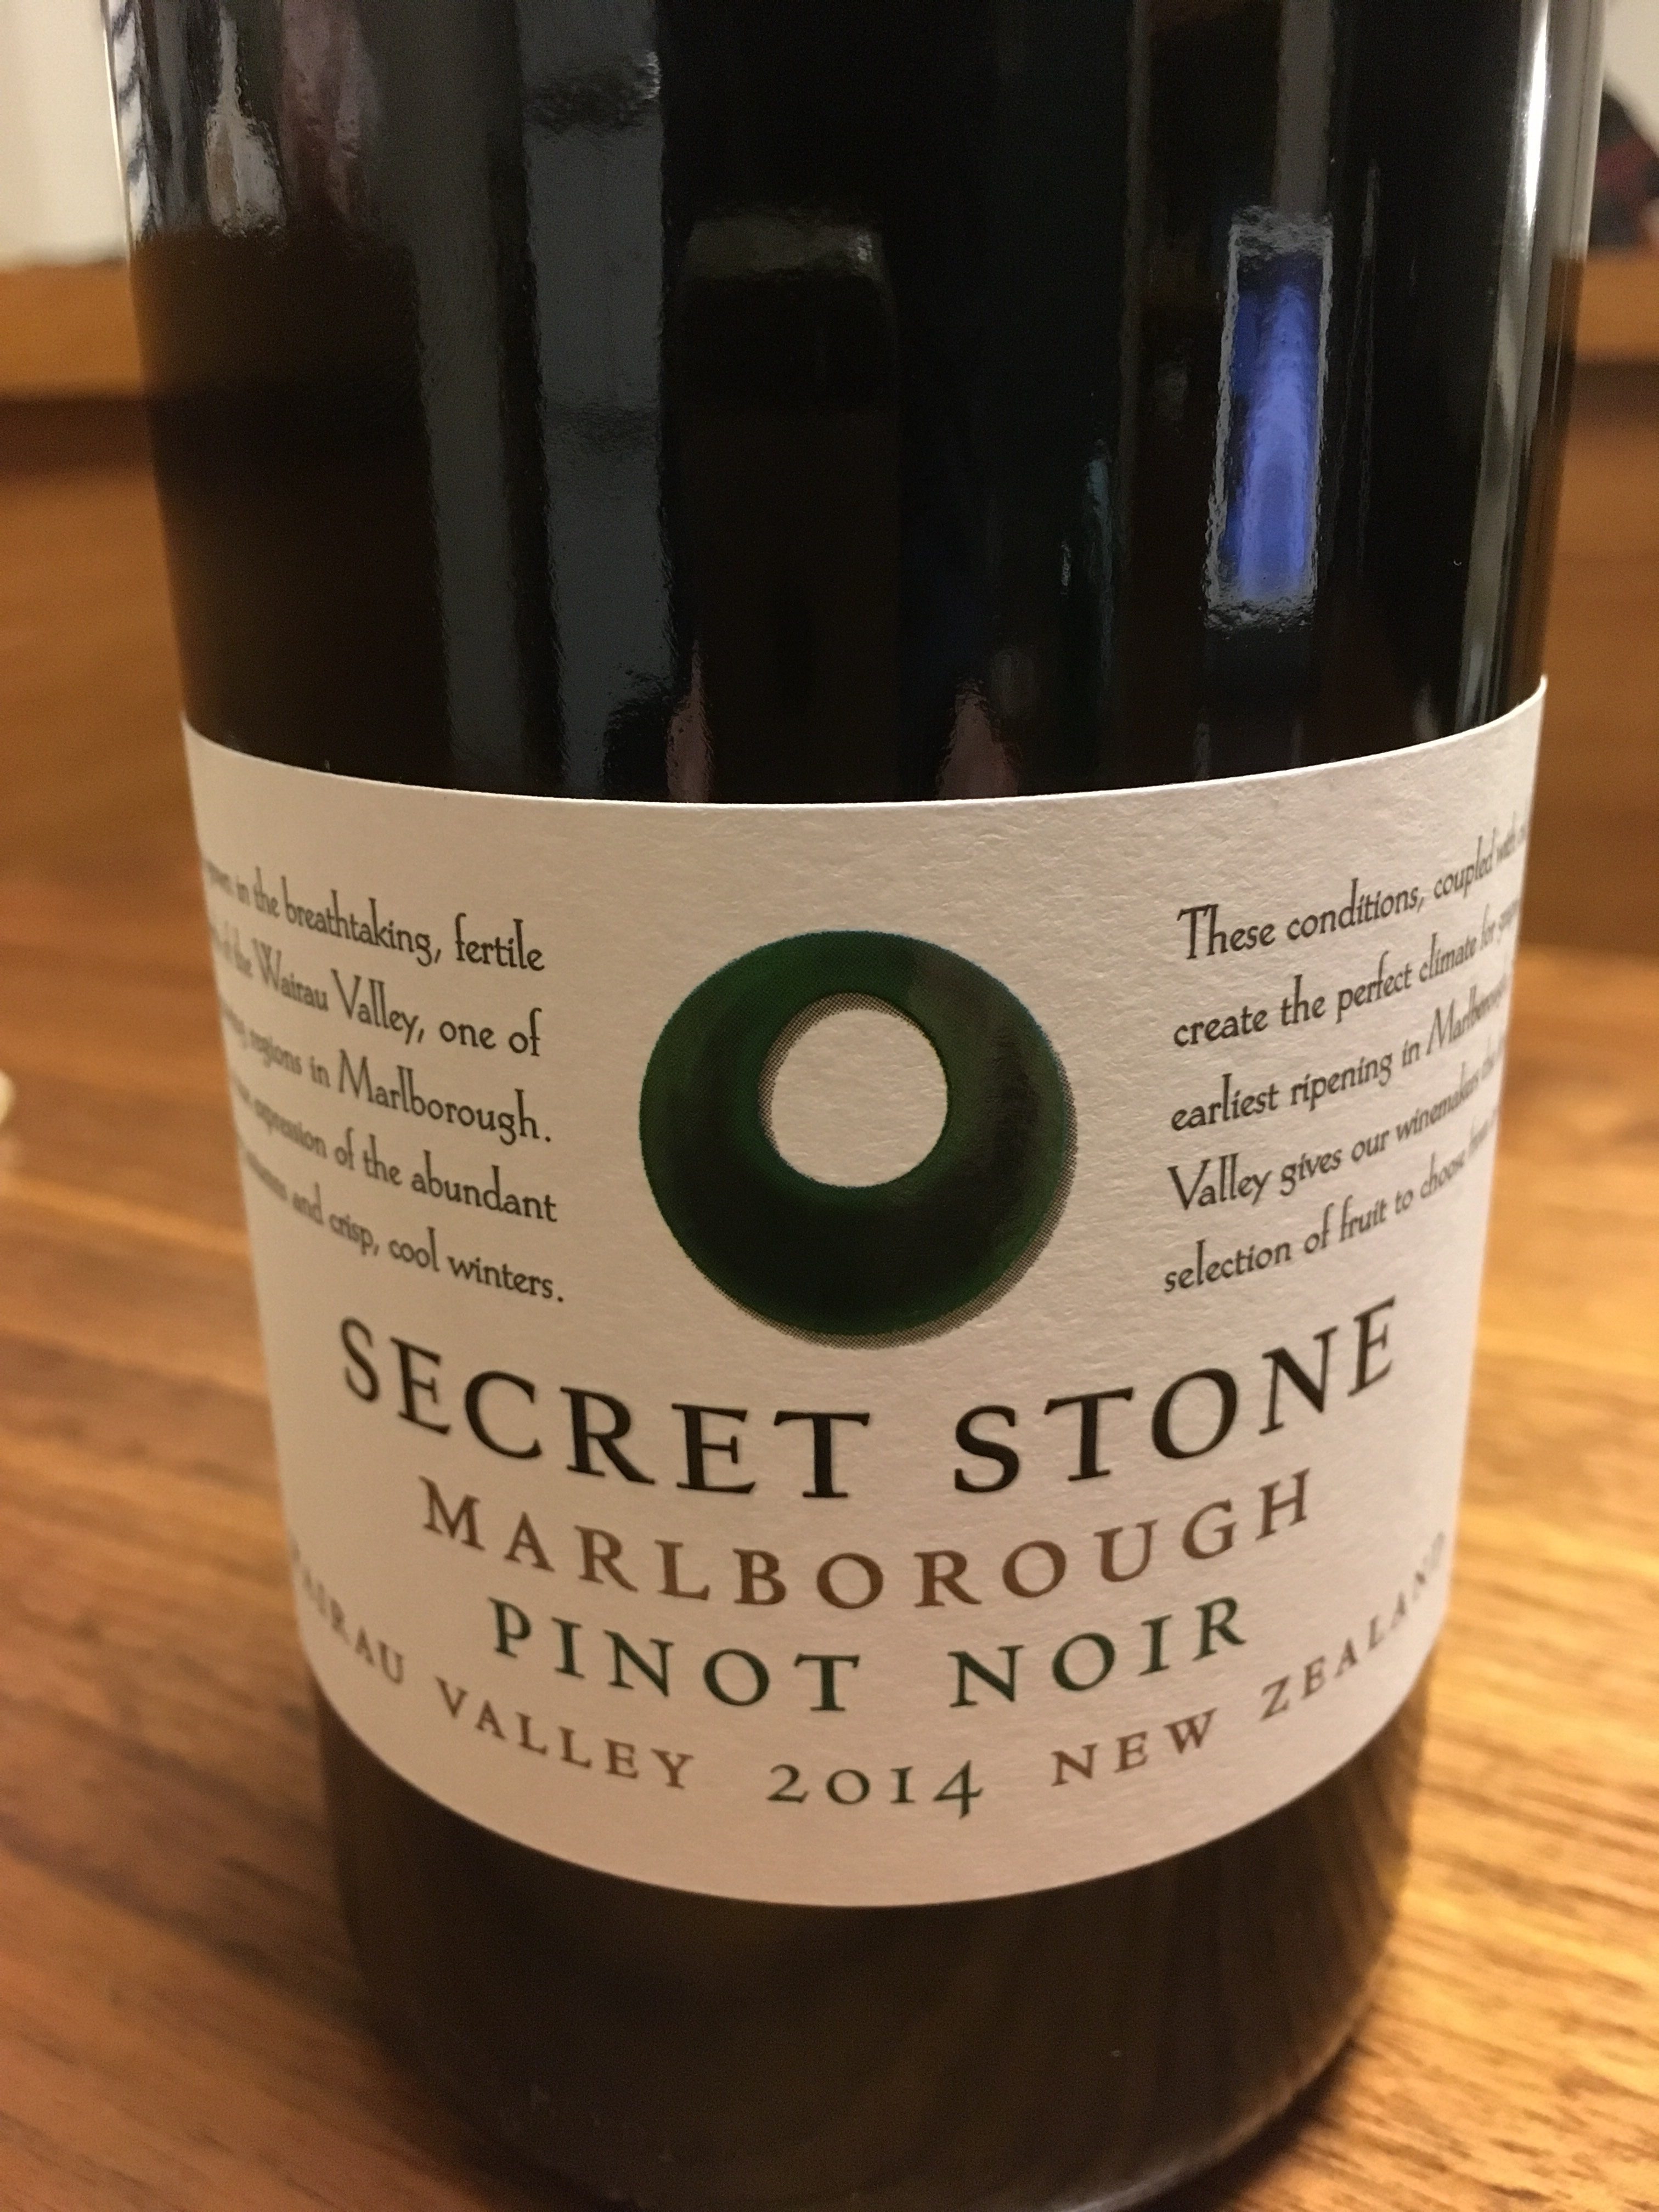 Secret Stone Marlborough シークレット ストーン マールボロ ピノノワール 今話題の安旨ワイン